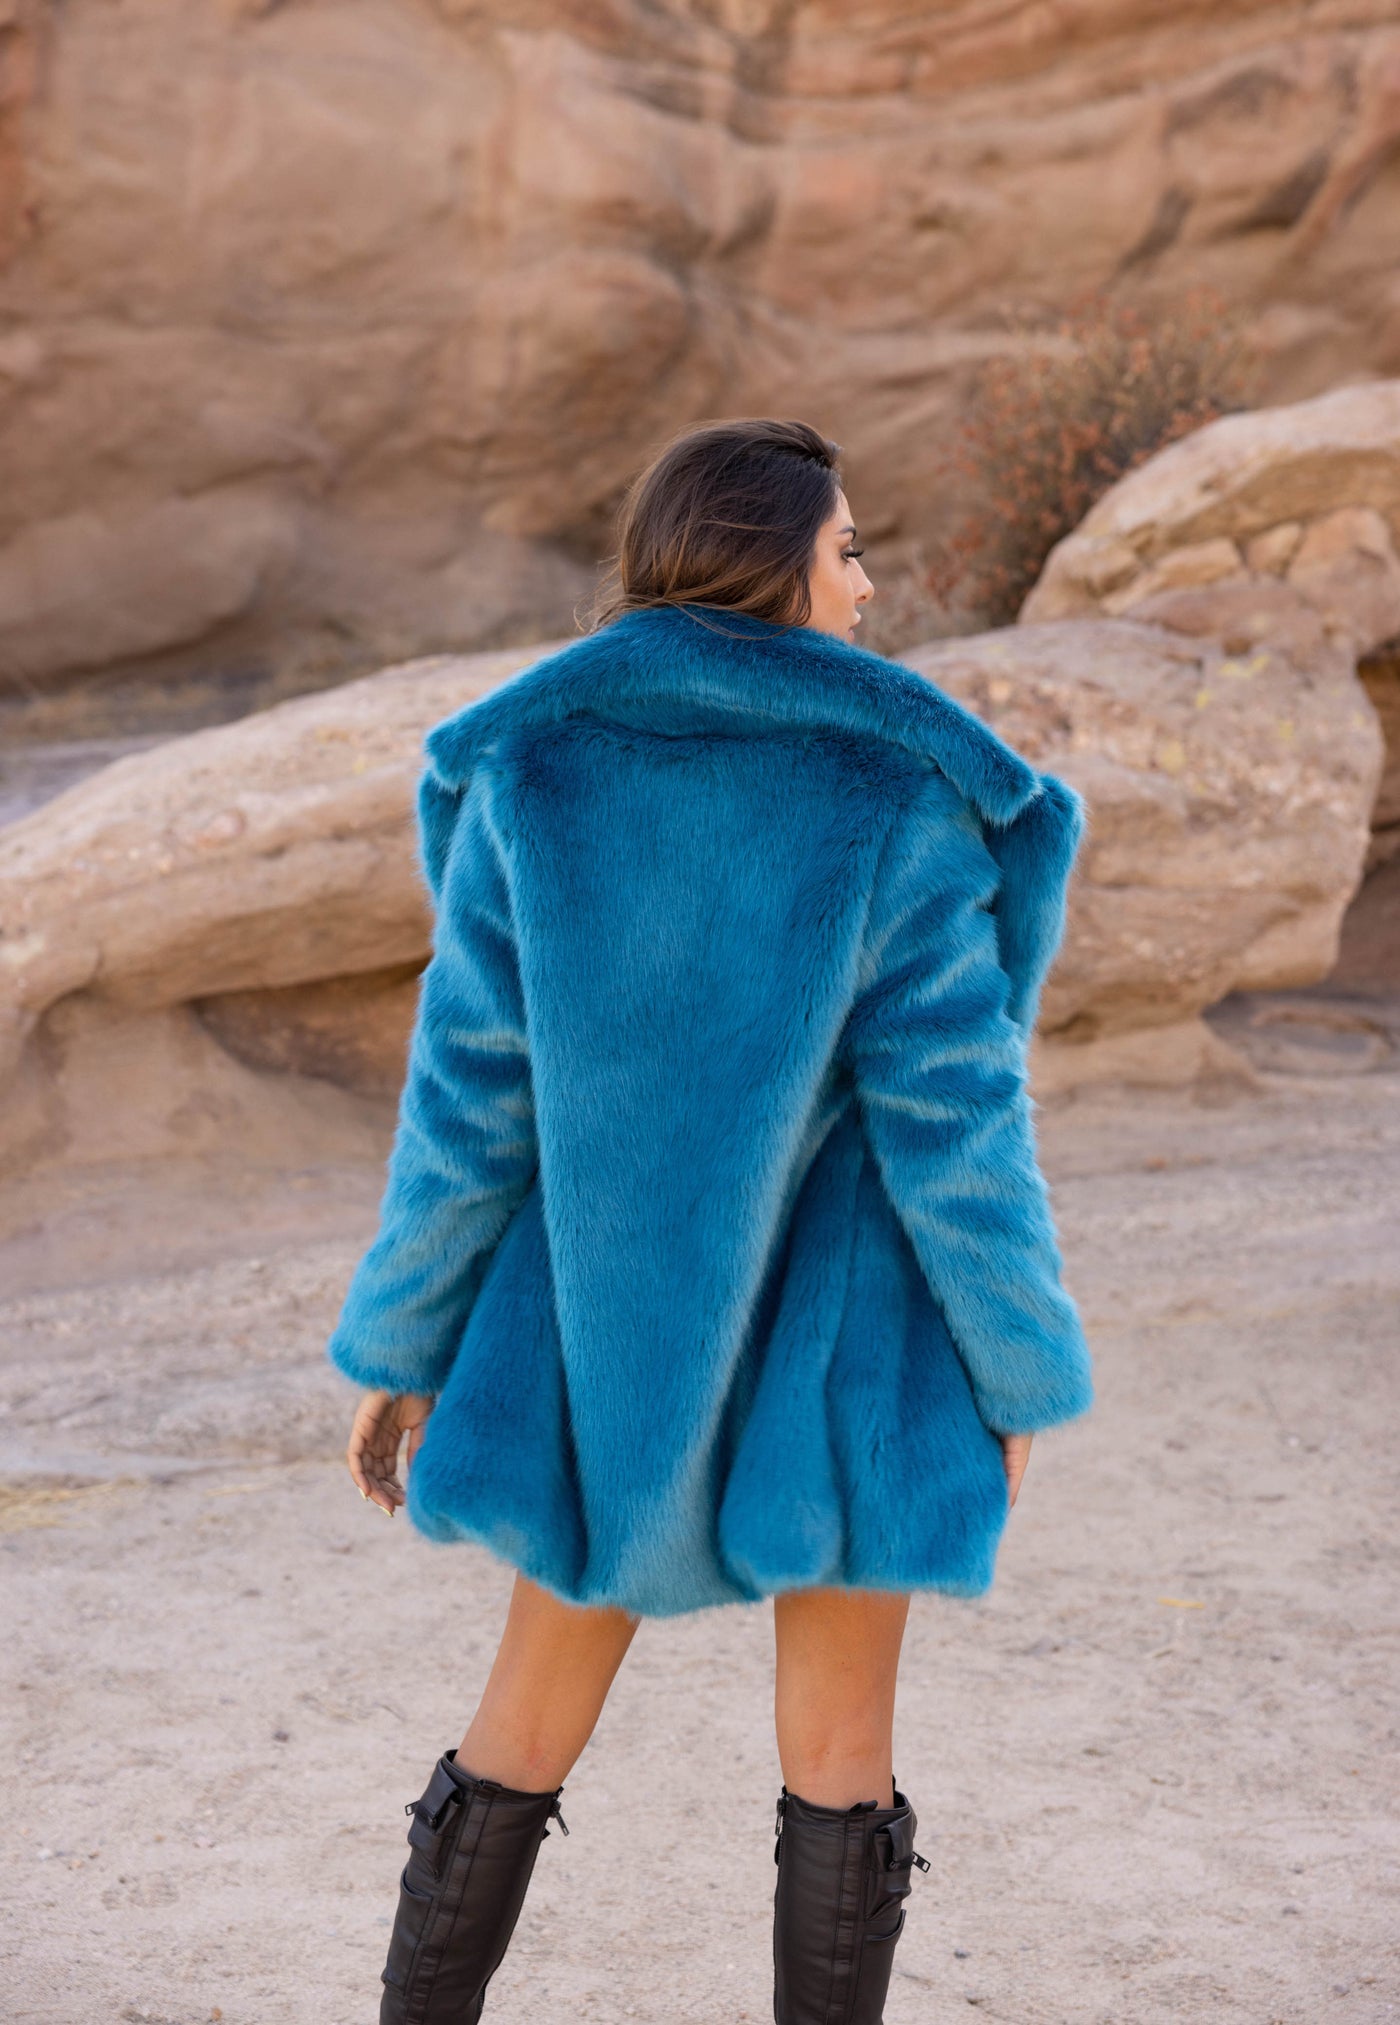 Women's Short Duchess Coat in "Teal Blue" Chinchilla